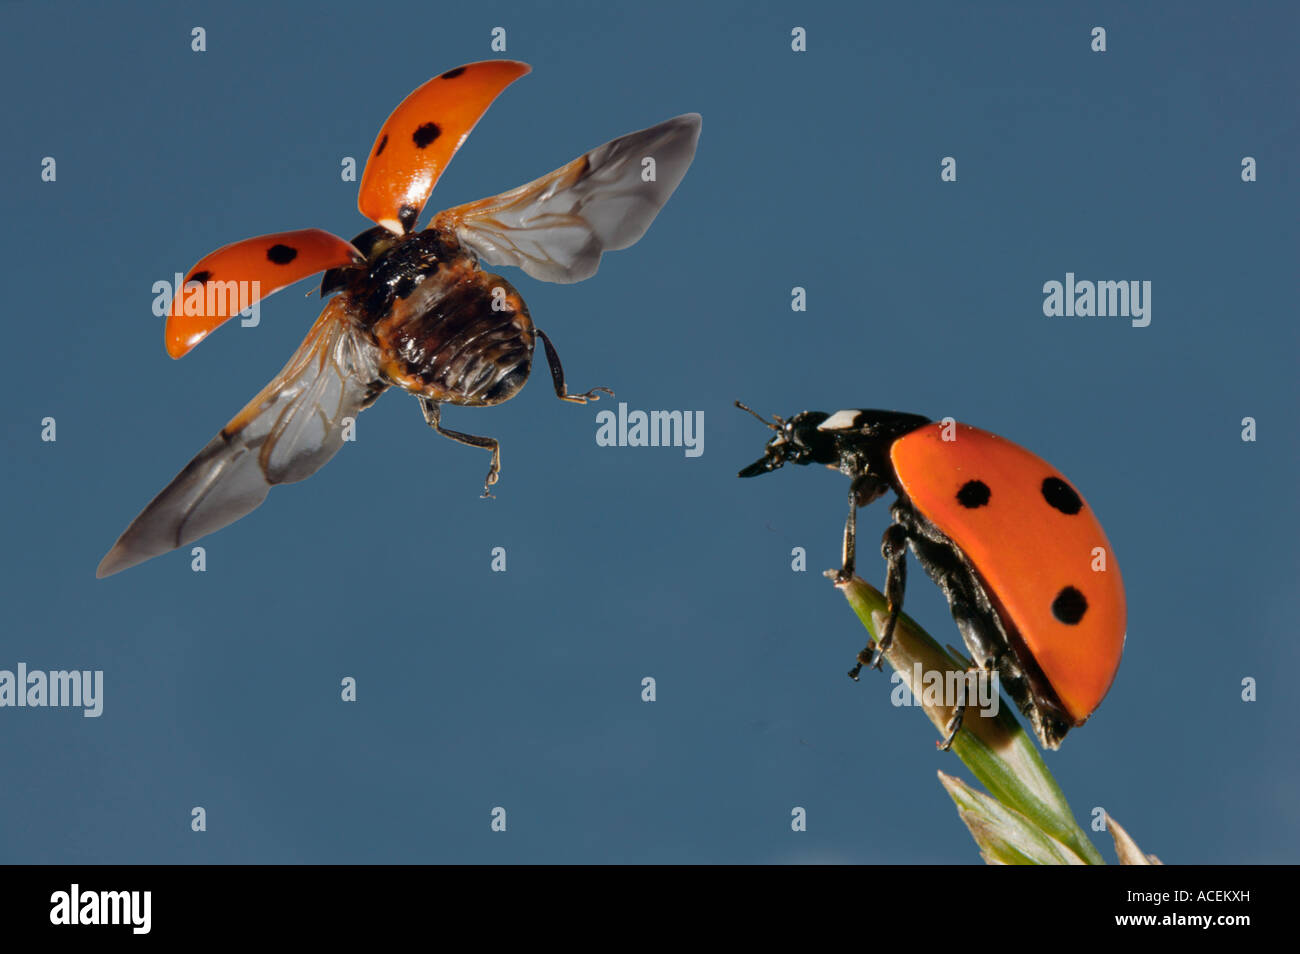 Sevenspotted lady beetle Coccinella septempunctata strobo photo Stock Photo